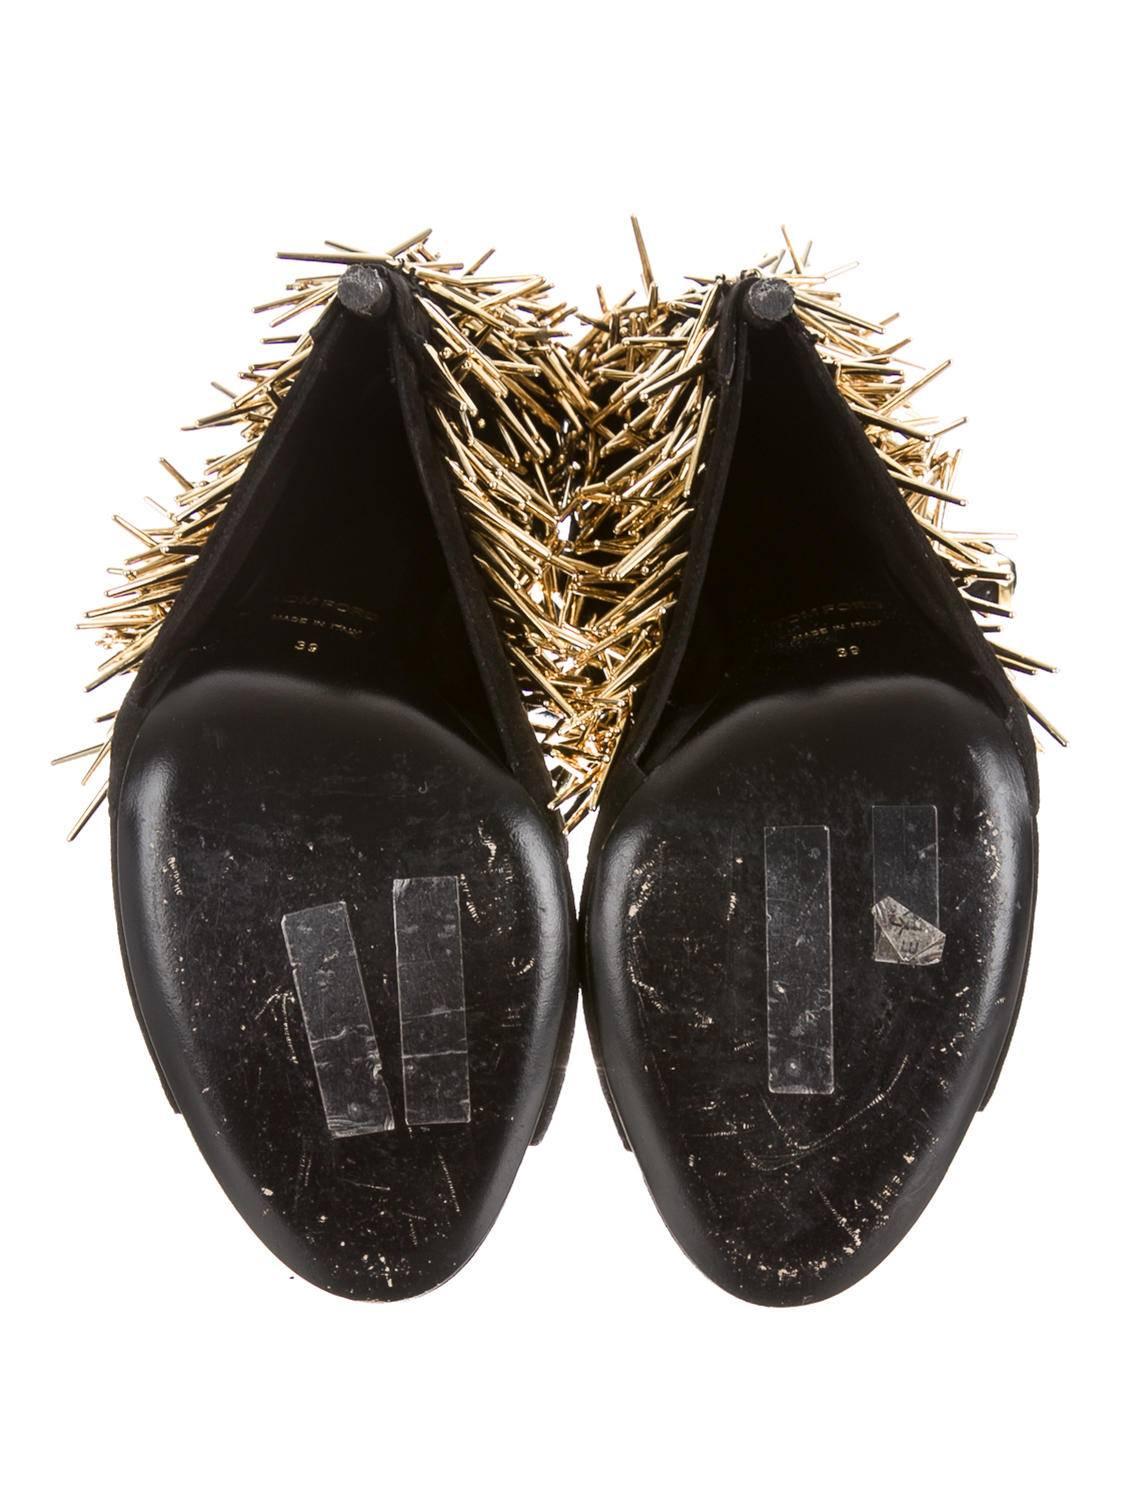 Tom Ford Spring Summer 2013 Black & Gold Spike heels 39 In Excellent Condition For Sale In Brisbane, Queensland